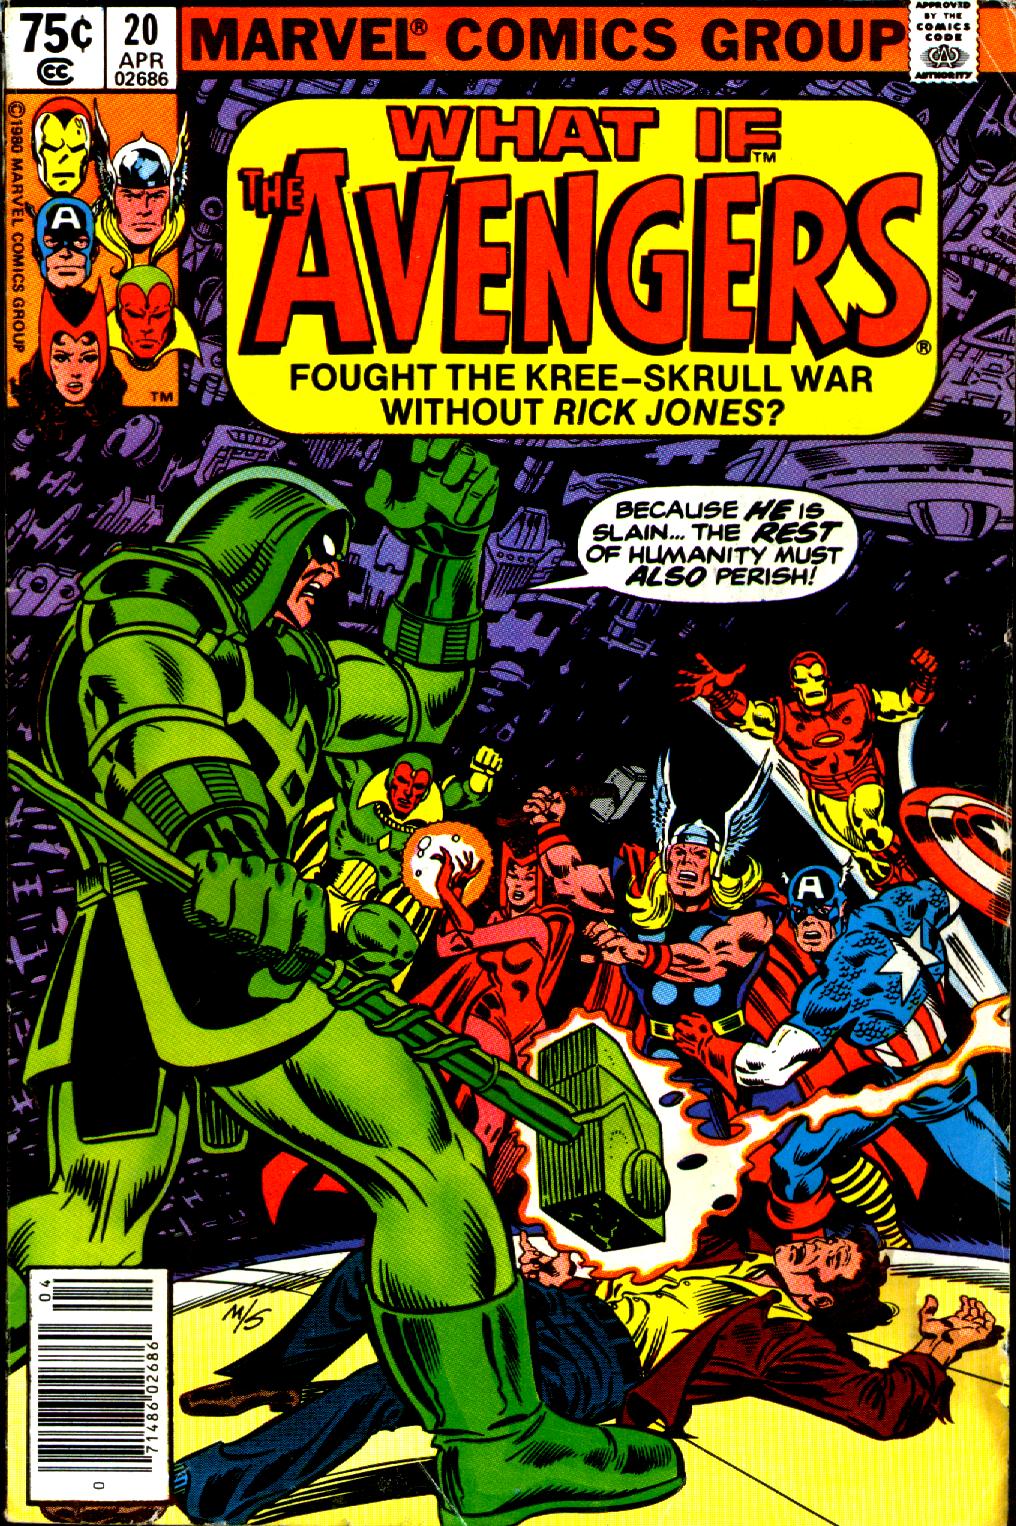 Avengers fought Kree without Rick Jones